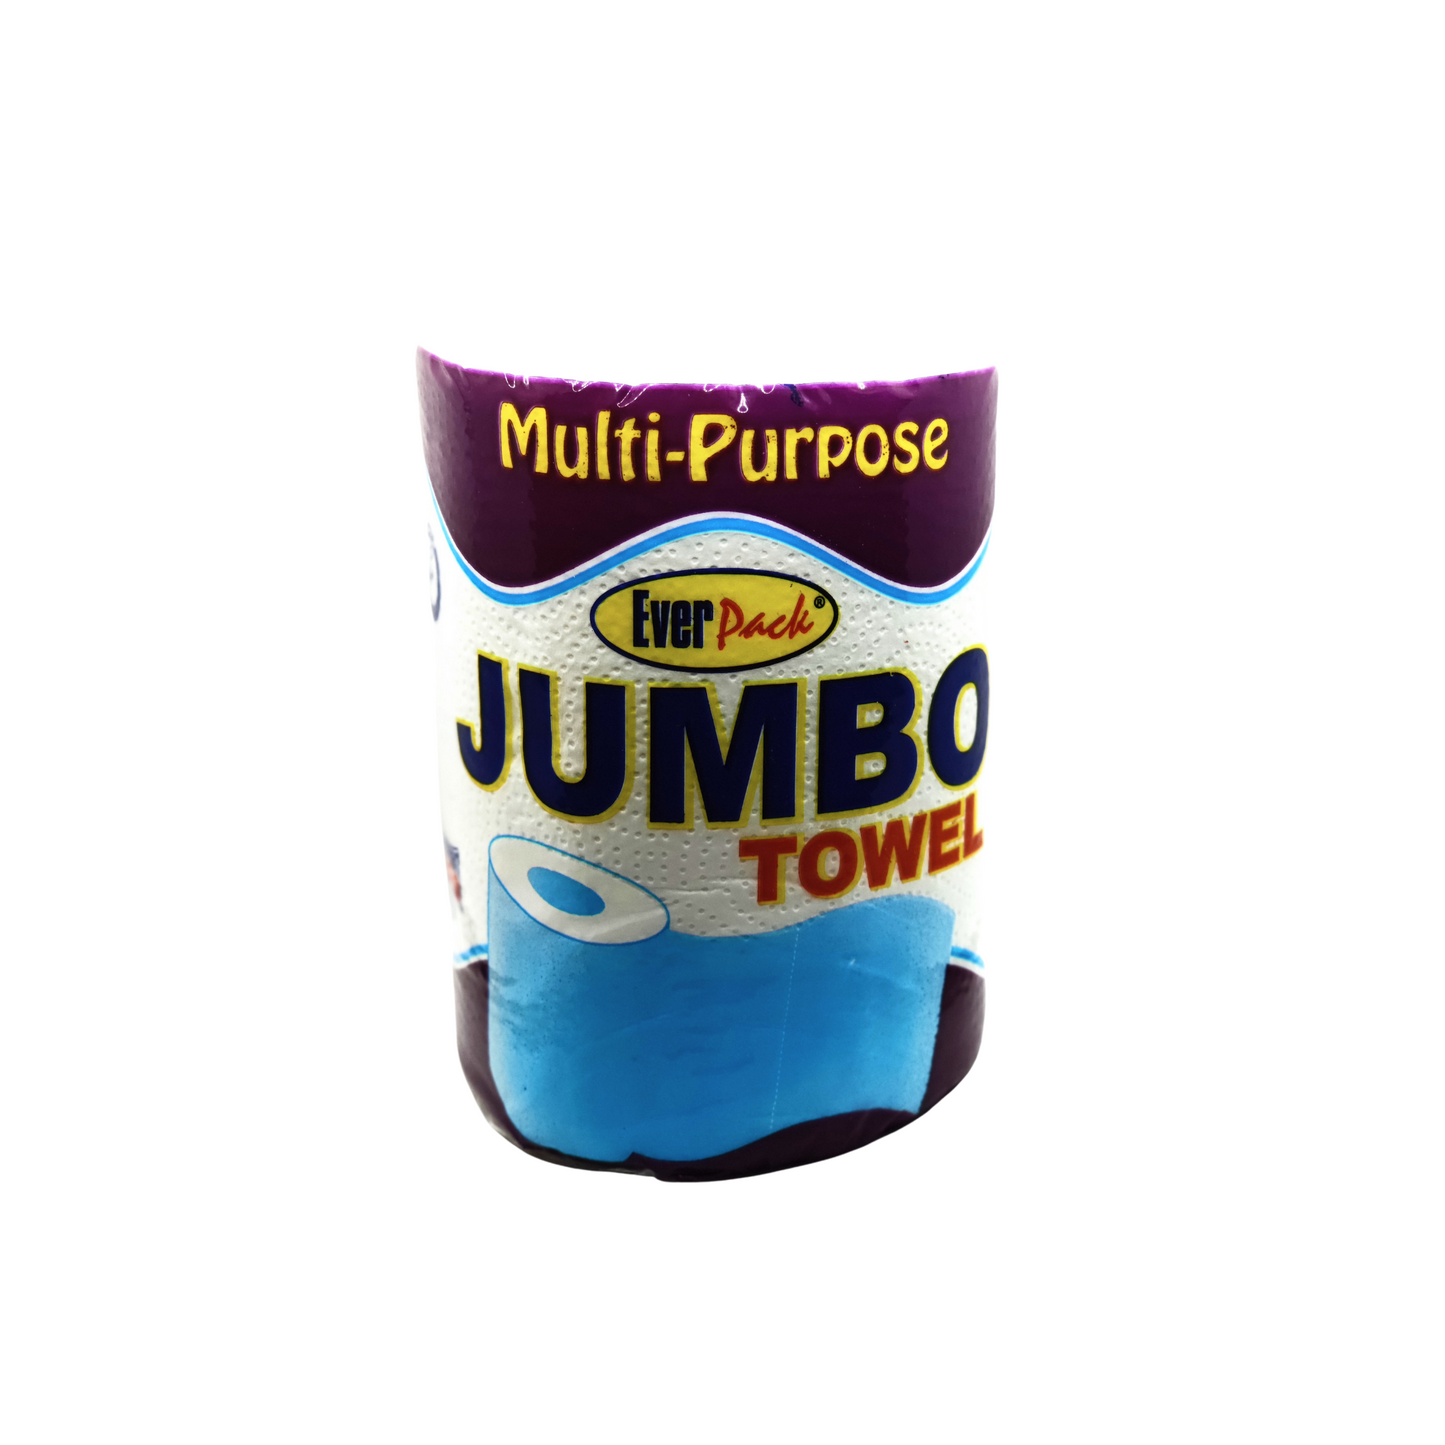 a packaging of ever pack multipurpose jumbo towel